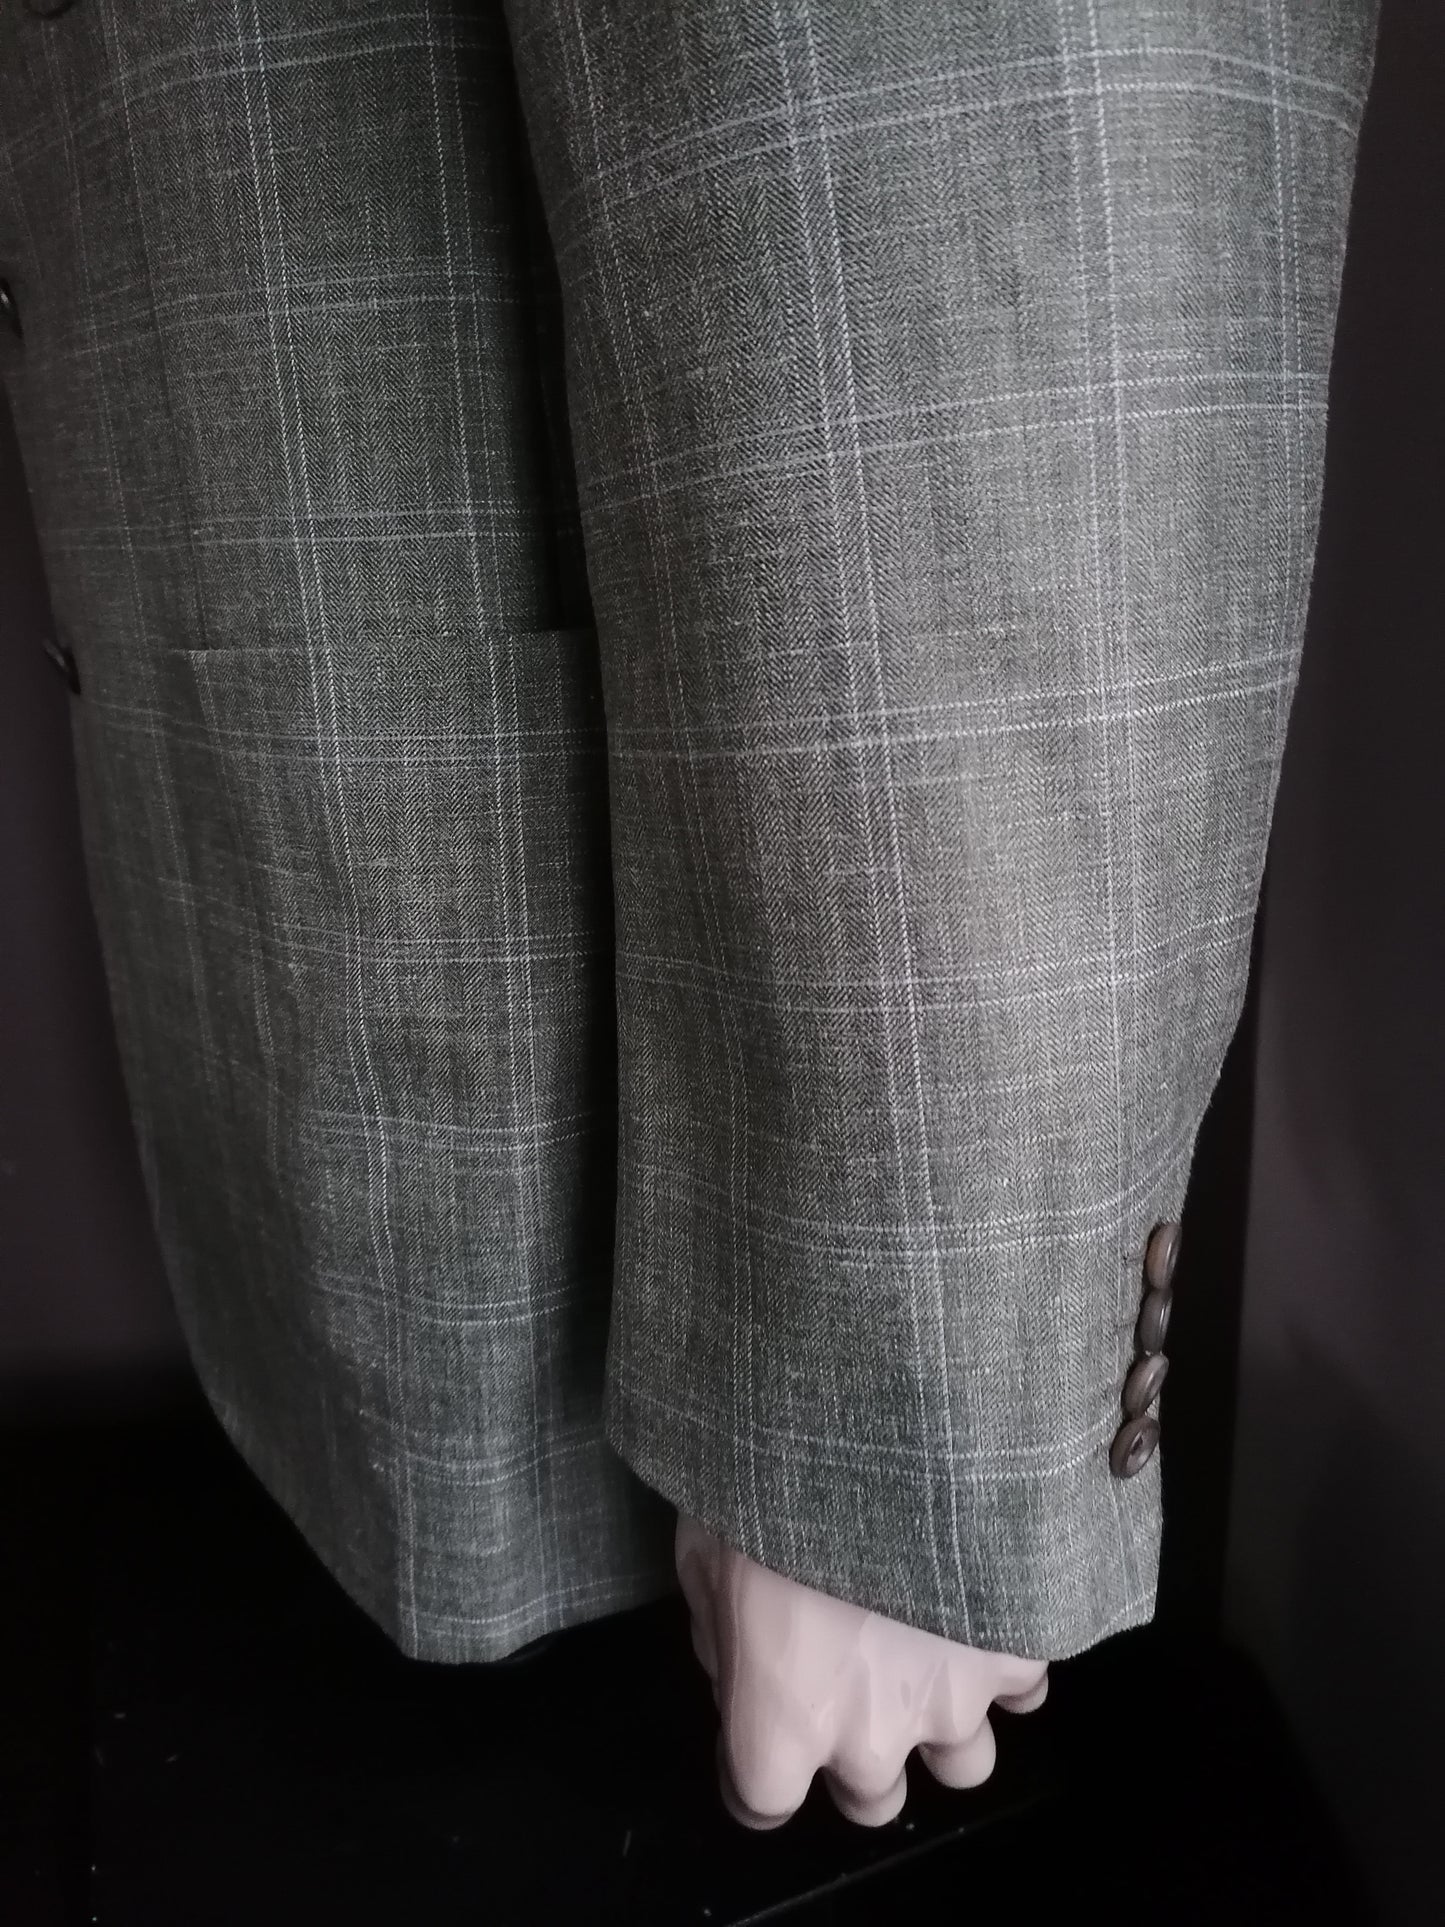 Franck Namani woolen and linen jacket. Green white checkered. Size 56 / XL